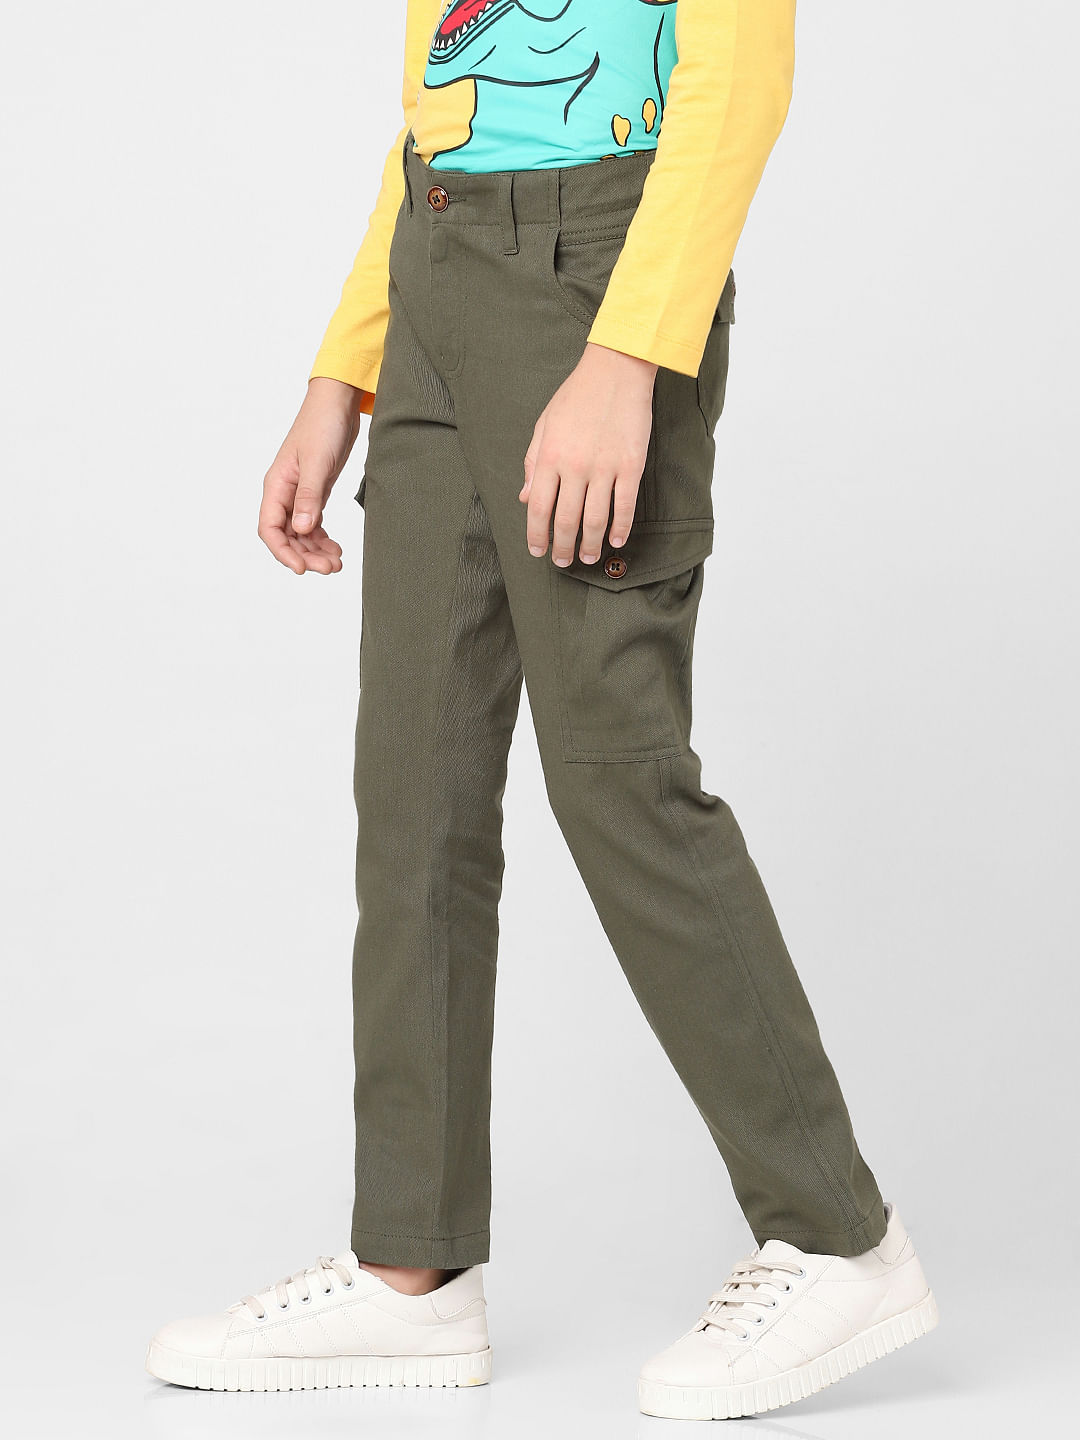 Buy Olive Green Chino Pants for Boys Online at JackJones Junior 149733402